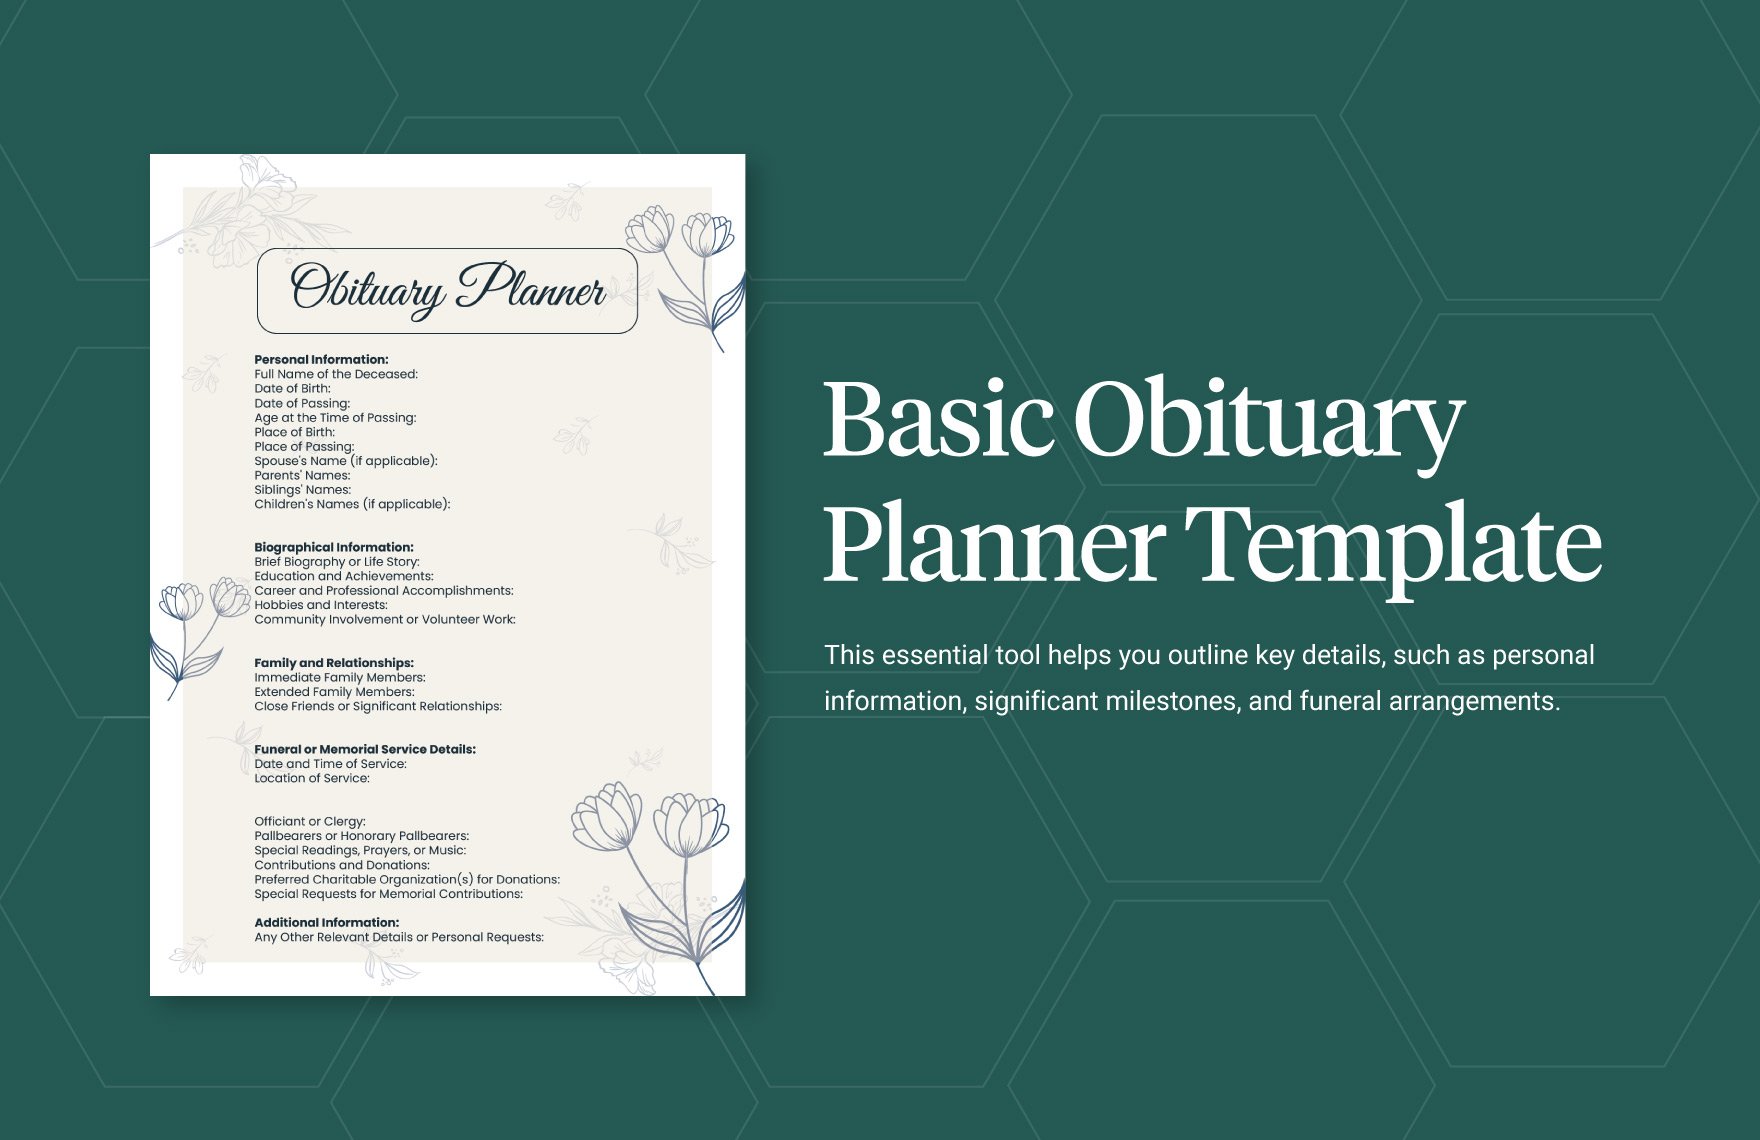 Basic Obituary Planner Template